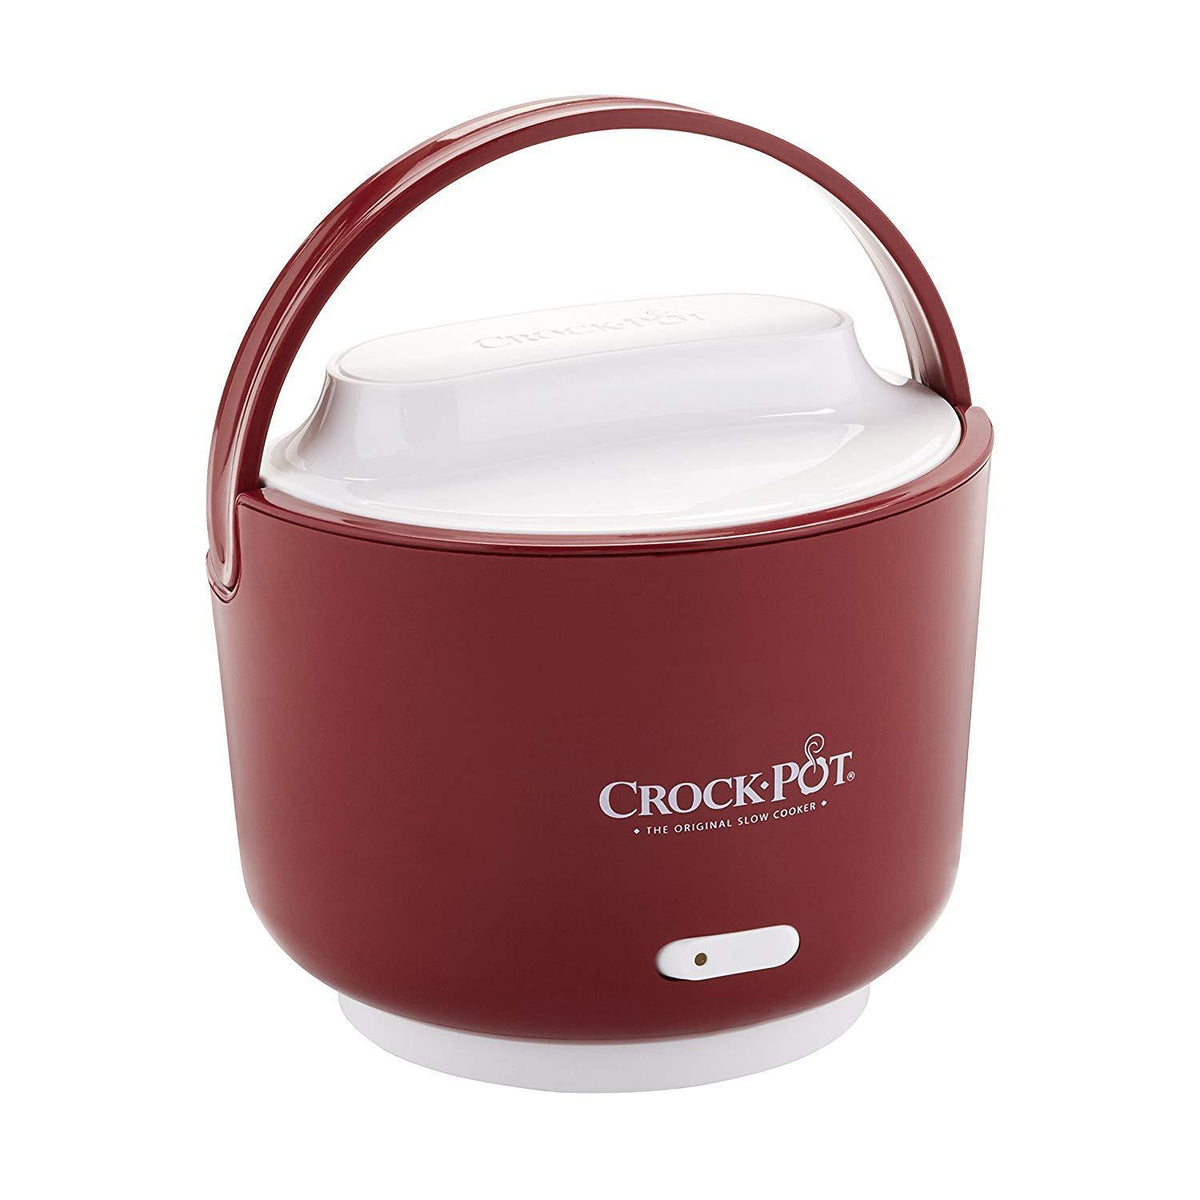 Crock-Pot Lunch Crock Food Warmer Black Friday Sale Up to 33% off